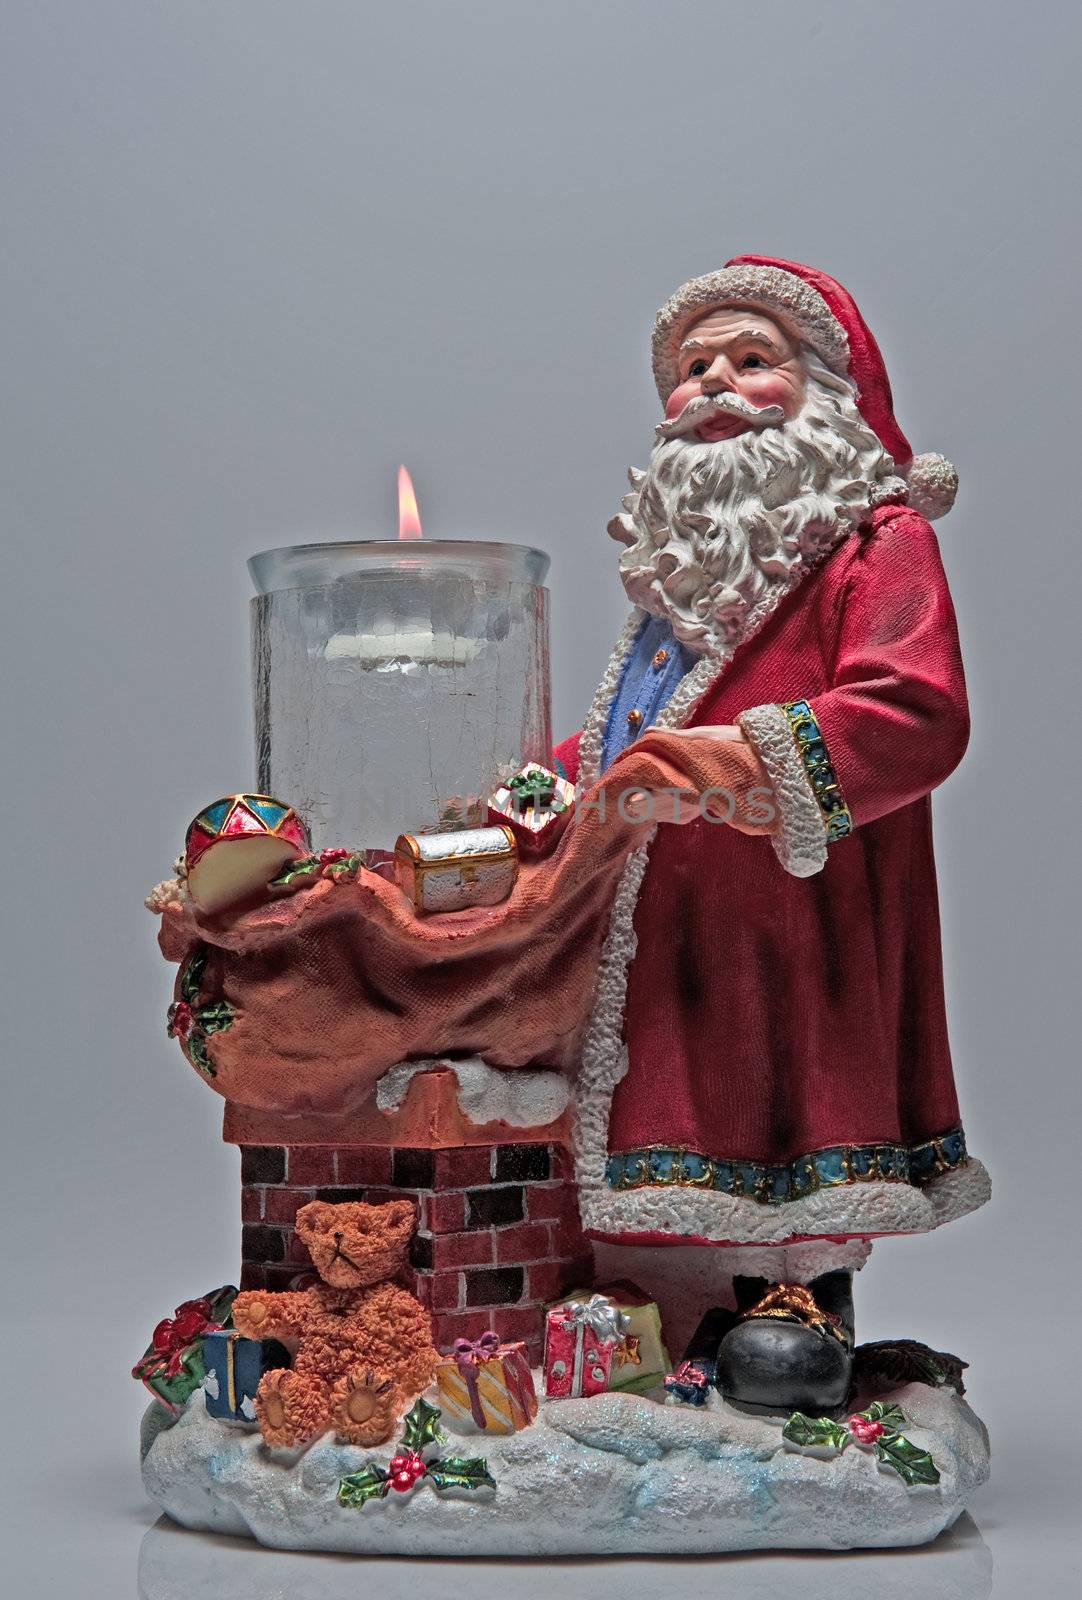 Santa Claus by Marcus